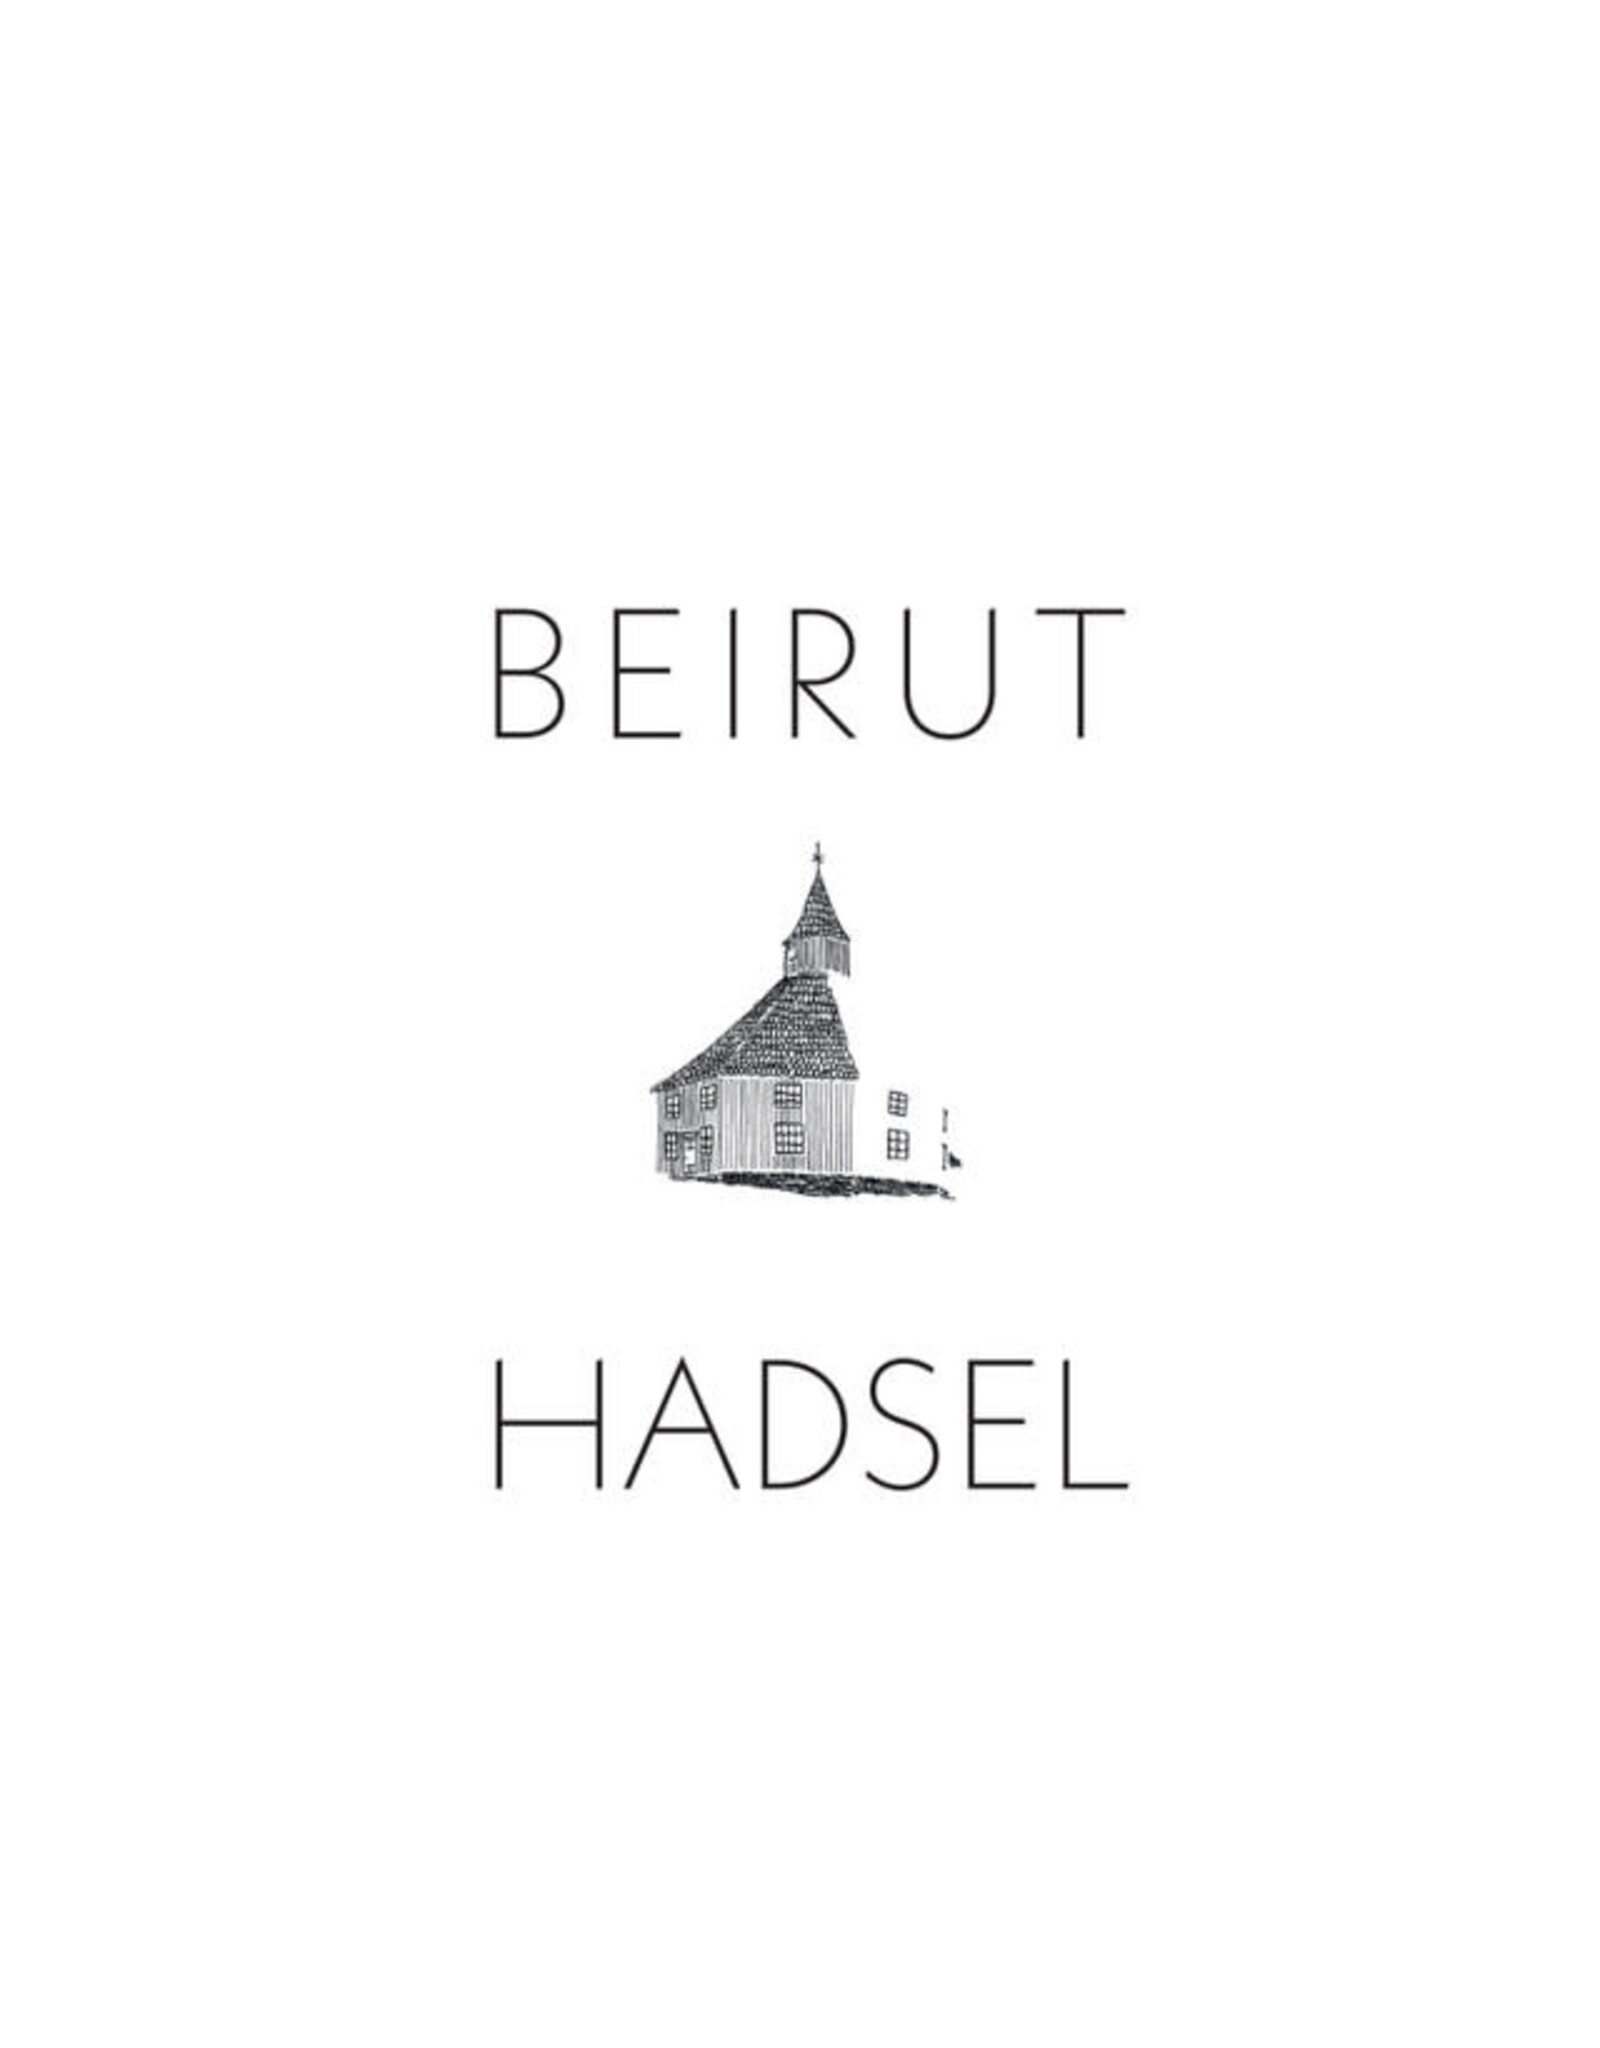 Pompeii Beirut: Hadsel (ice breaker coloured) LP